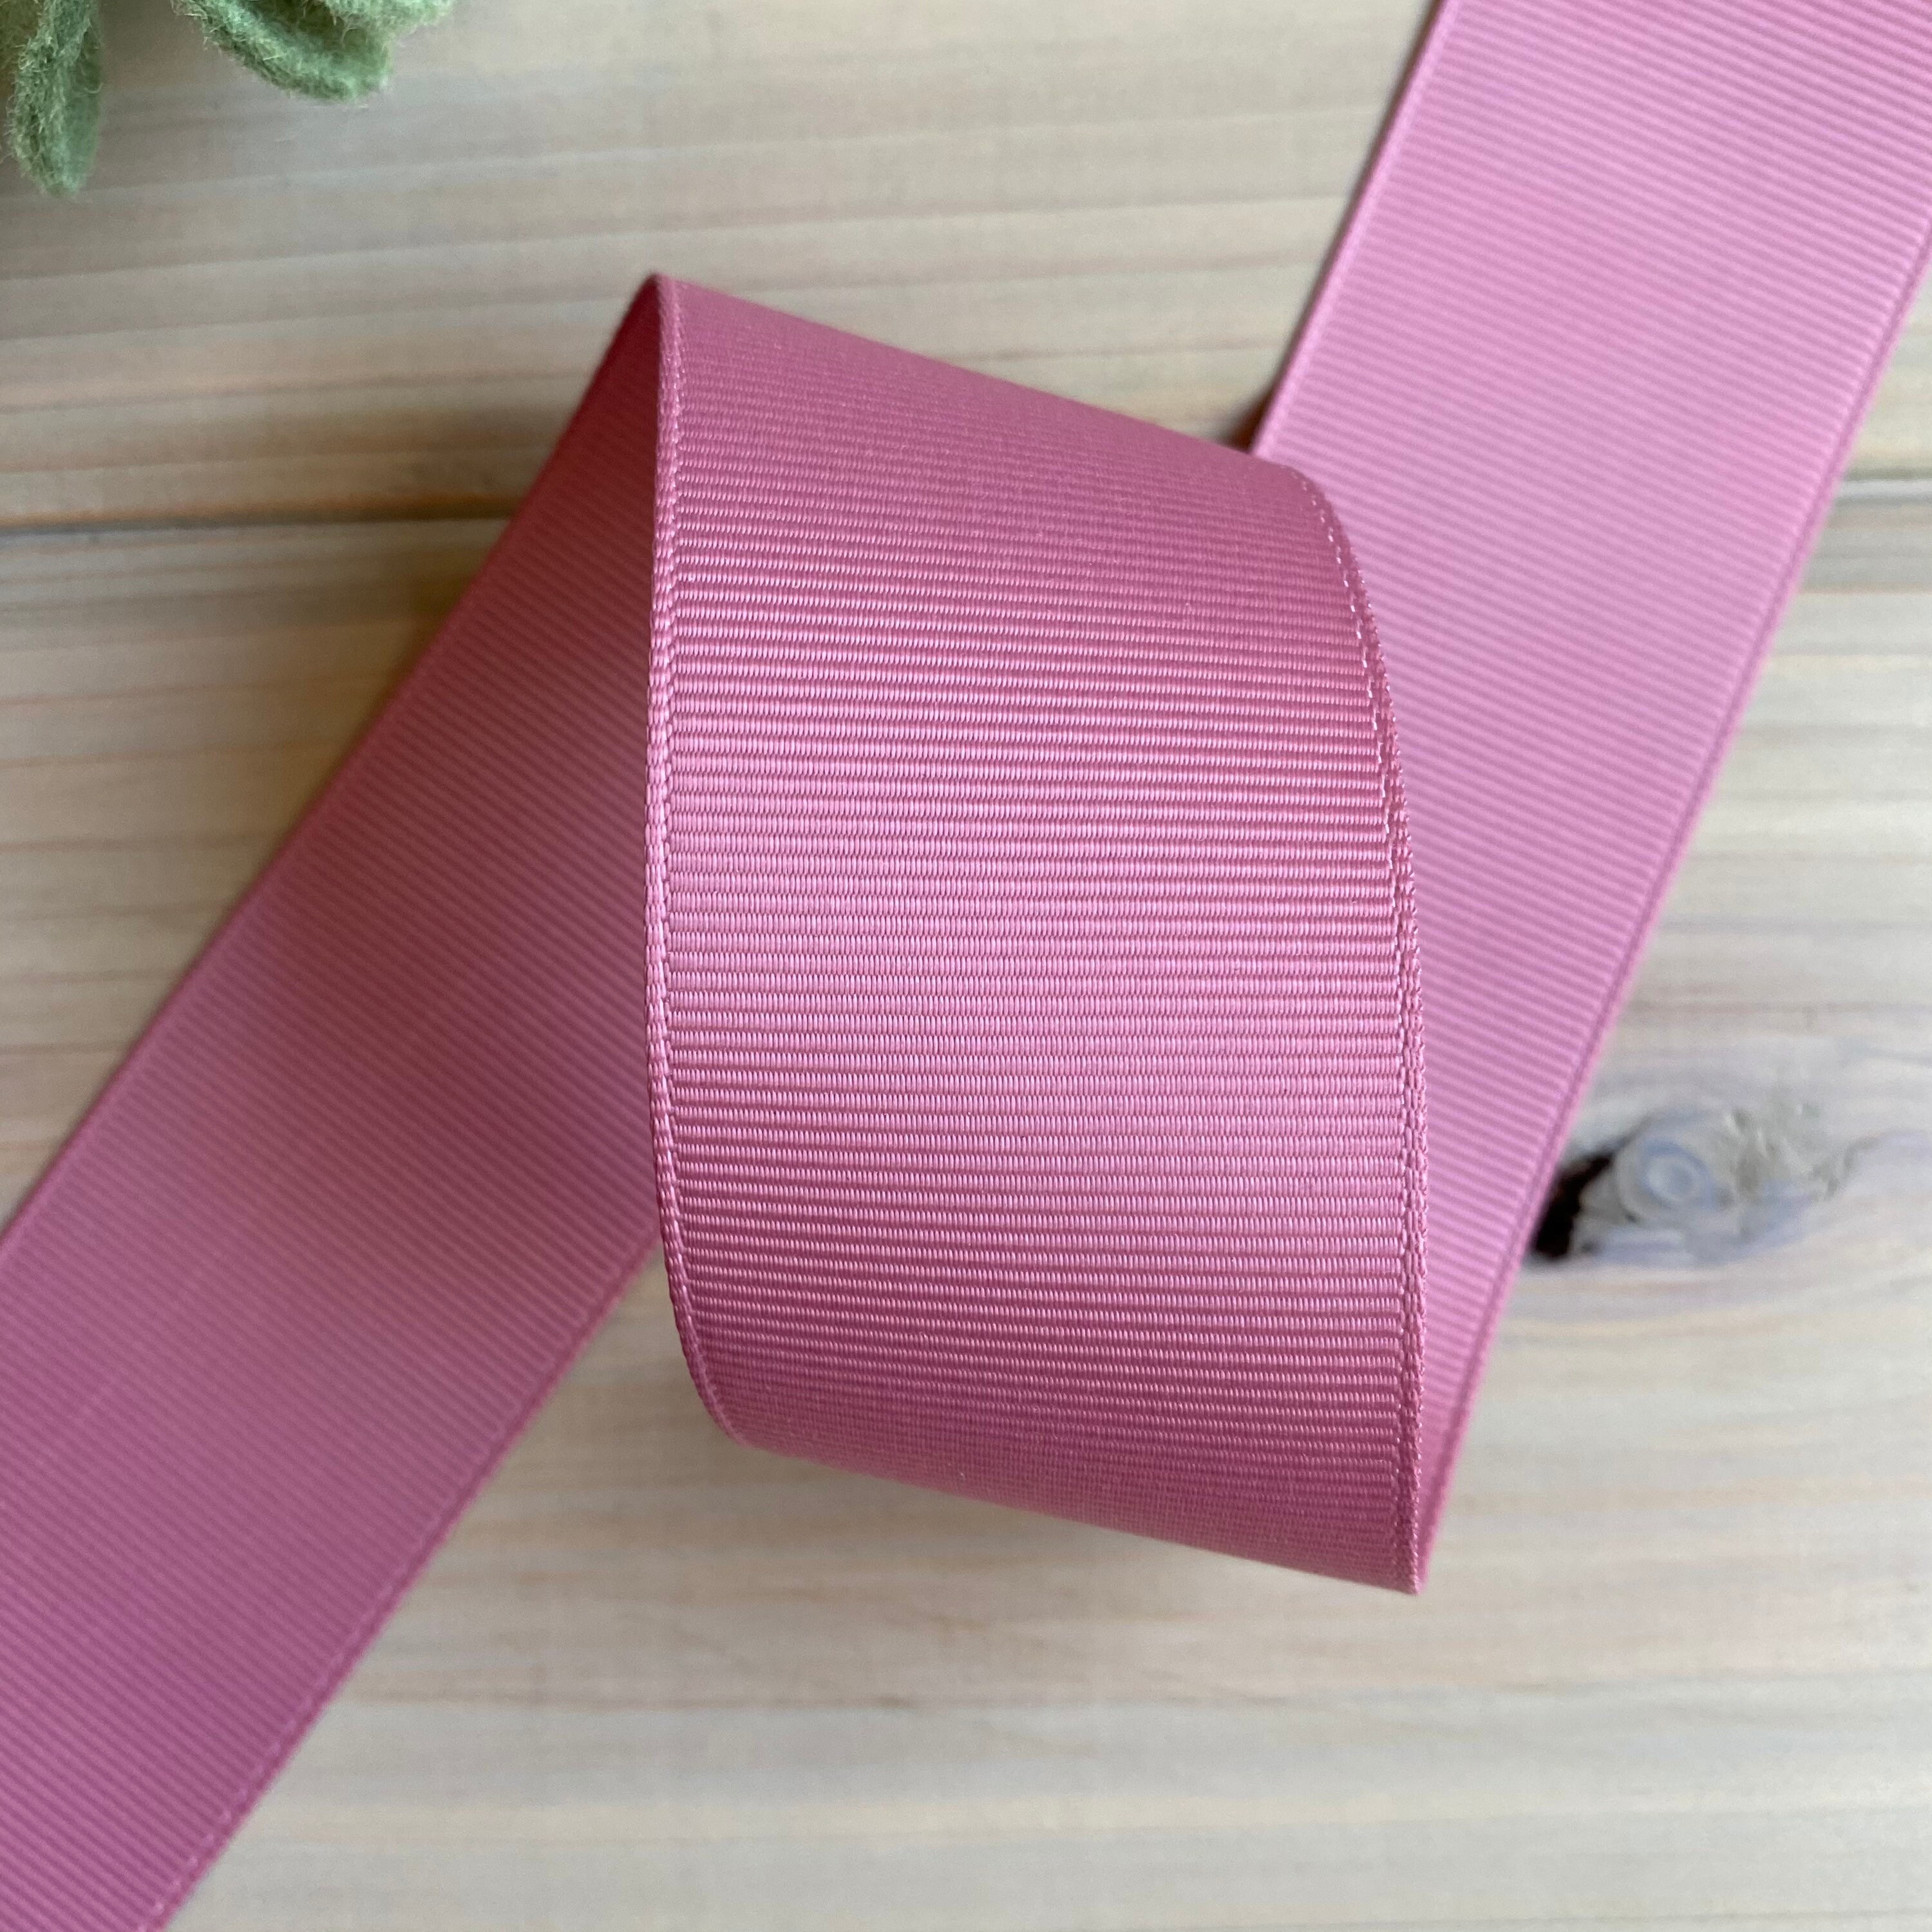 Ribbon - Dupioni Supreme Wired Edge, Shocking Pink, 1-1/2 Inch, 10